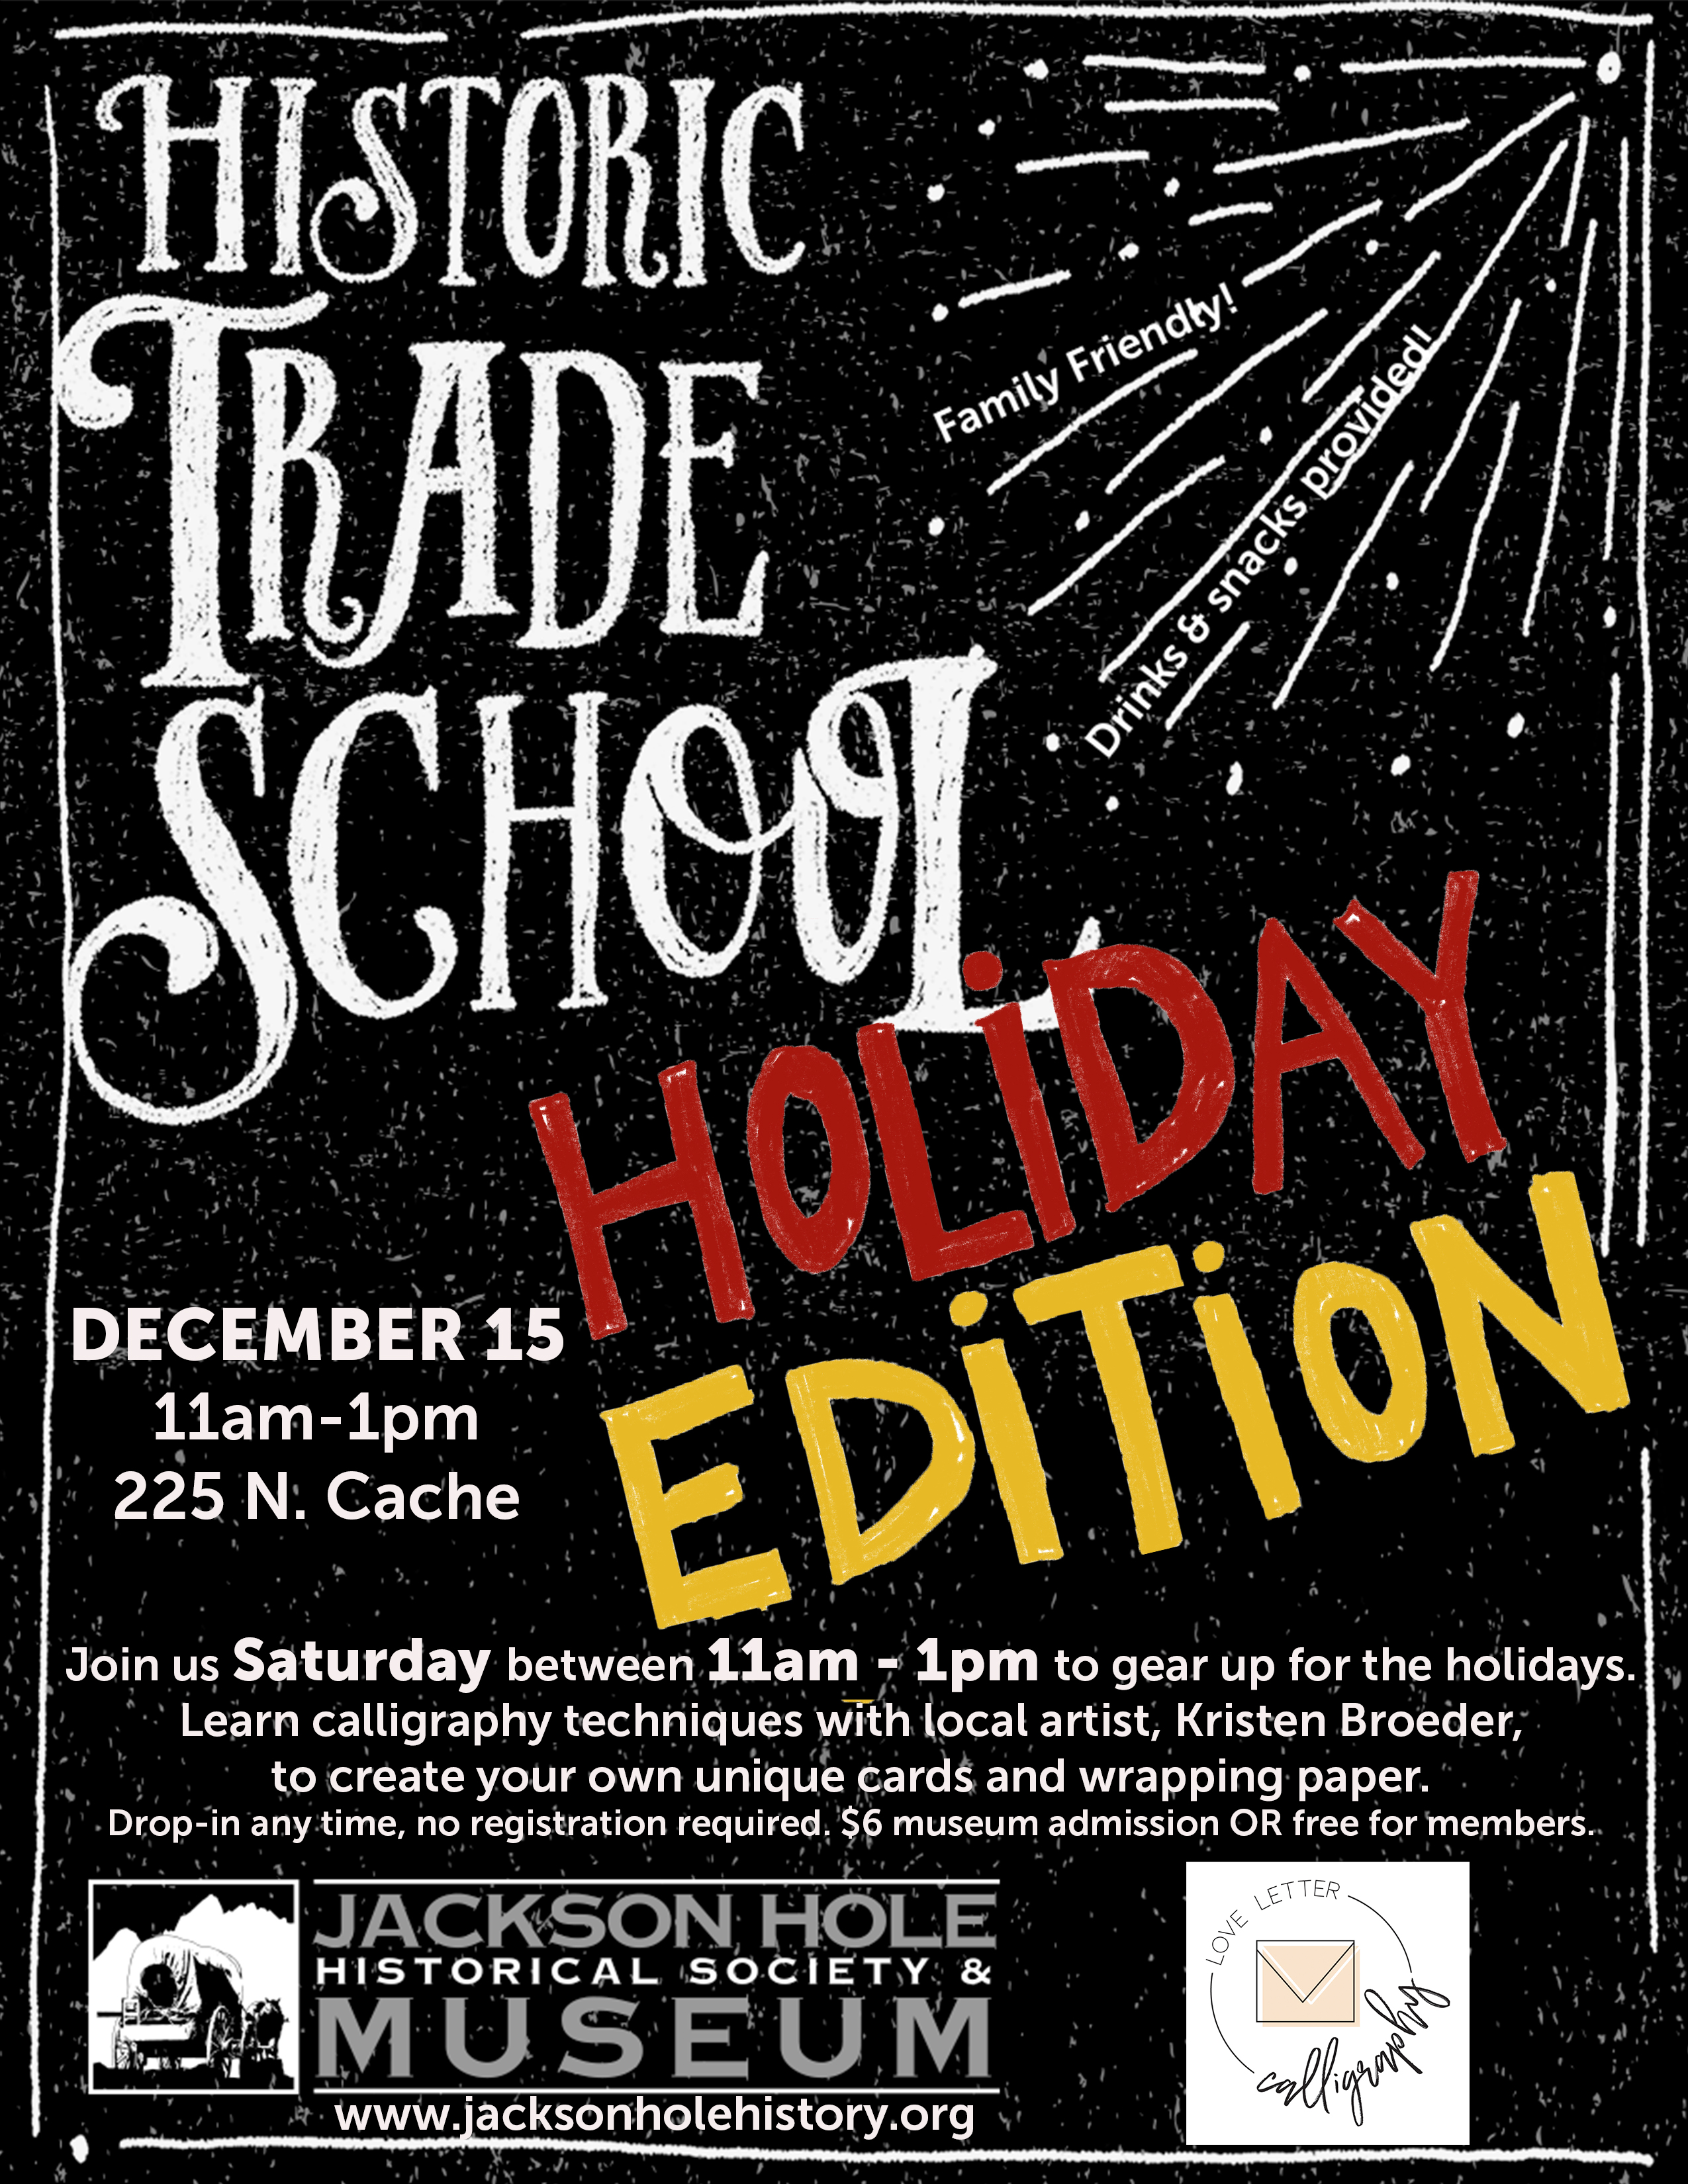 Historic Trade School Flyer December 2018 Jackson Hole Historical